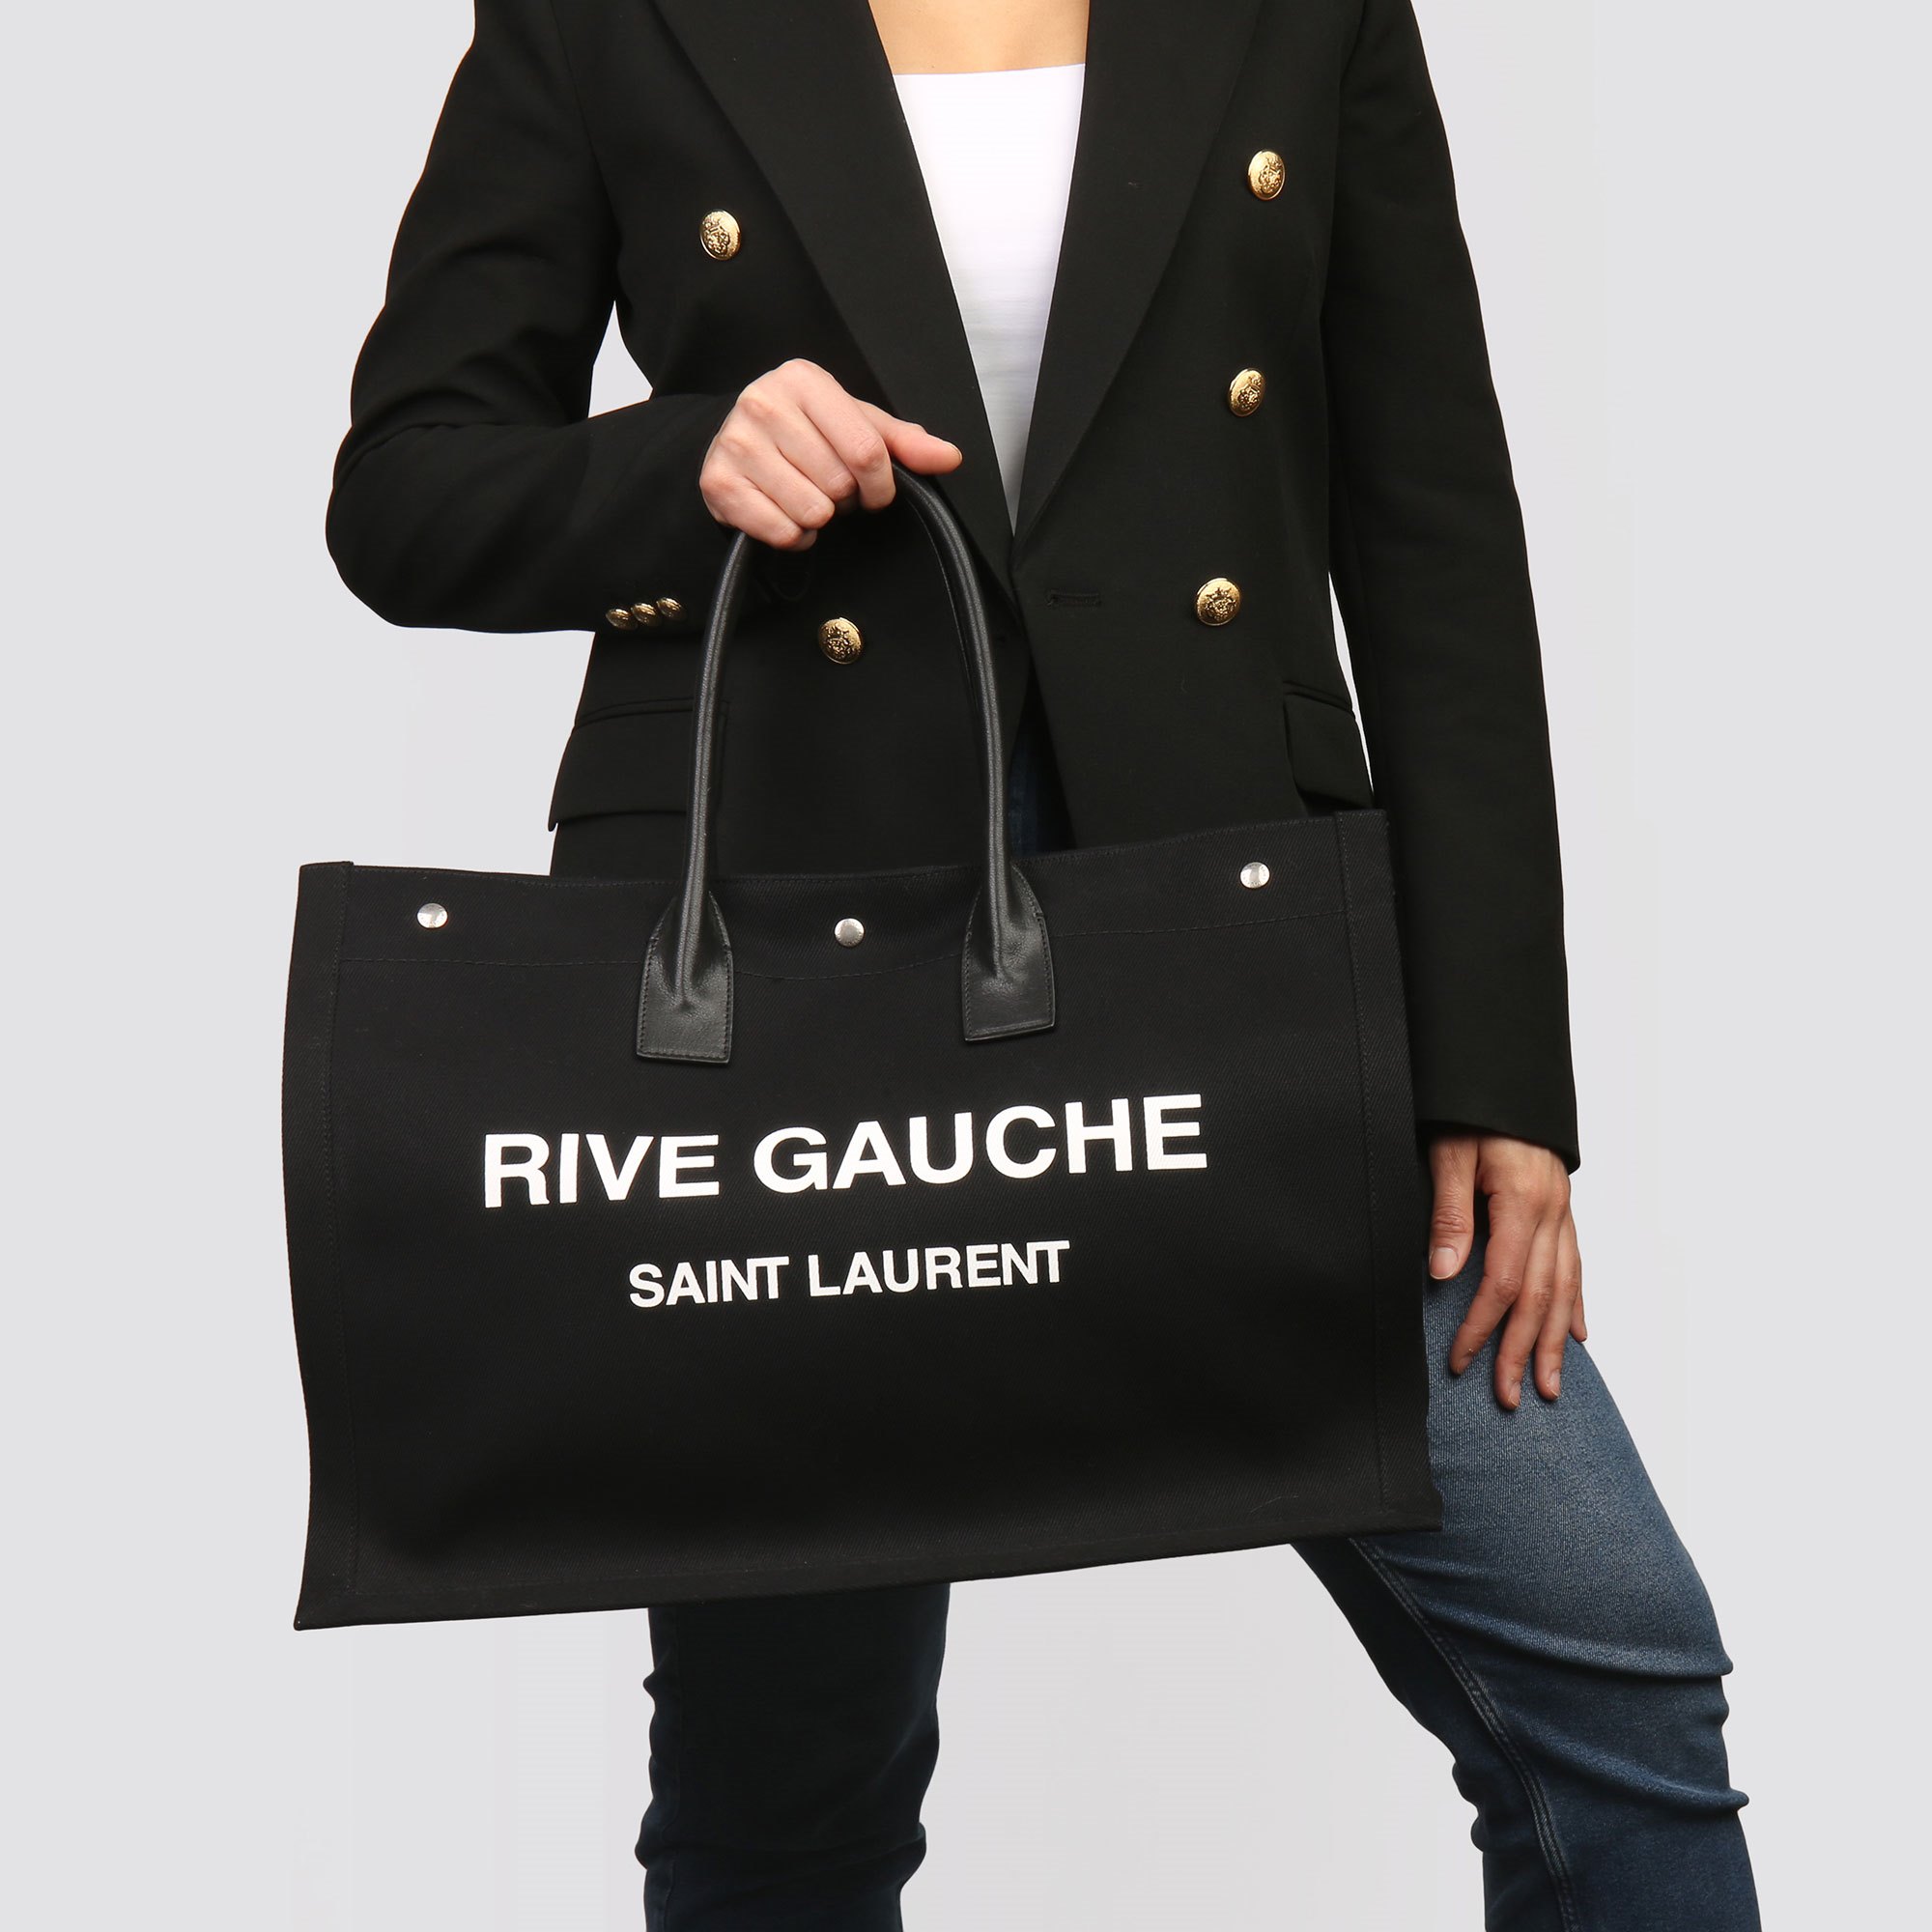 Saint Laurent Rive Gauche Tote 2020 HB3790 | Second Hand Handbags